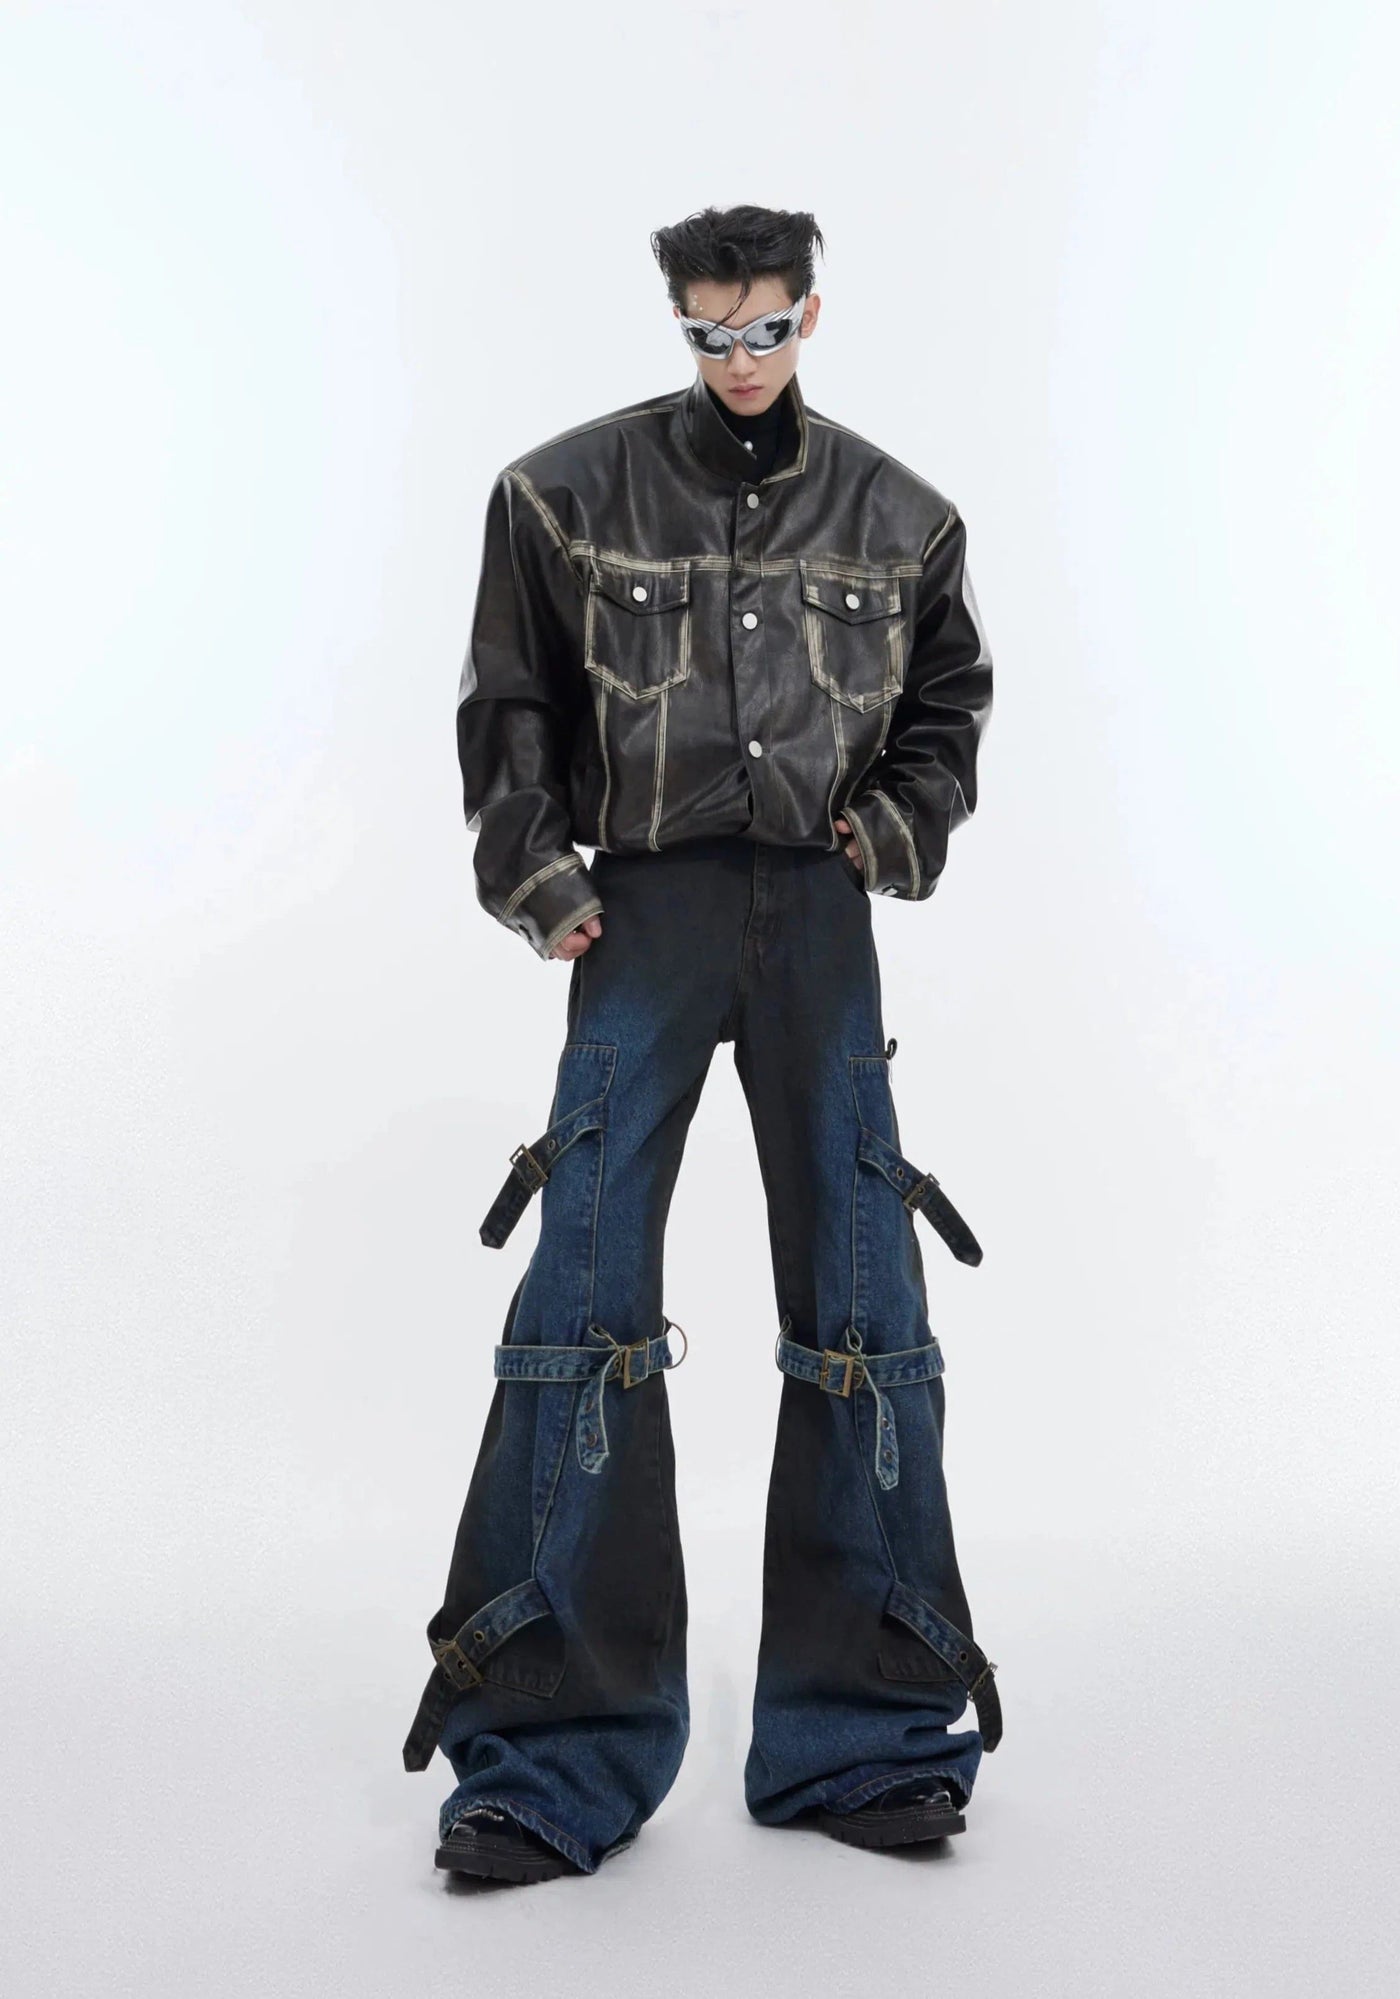 Multi-Strap Belt Jeans Korean Street Fashion Jeans By Argue Culture Shop Online at OH Vault